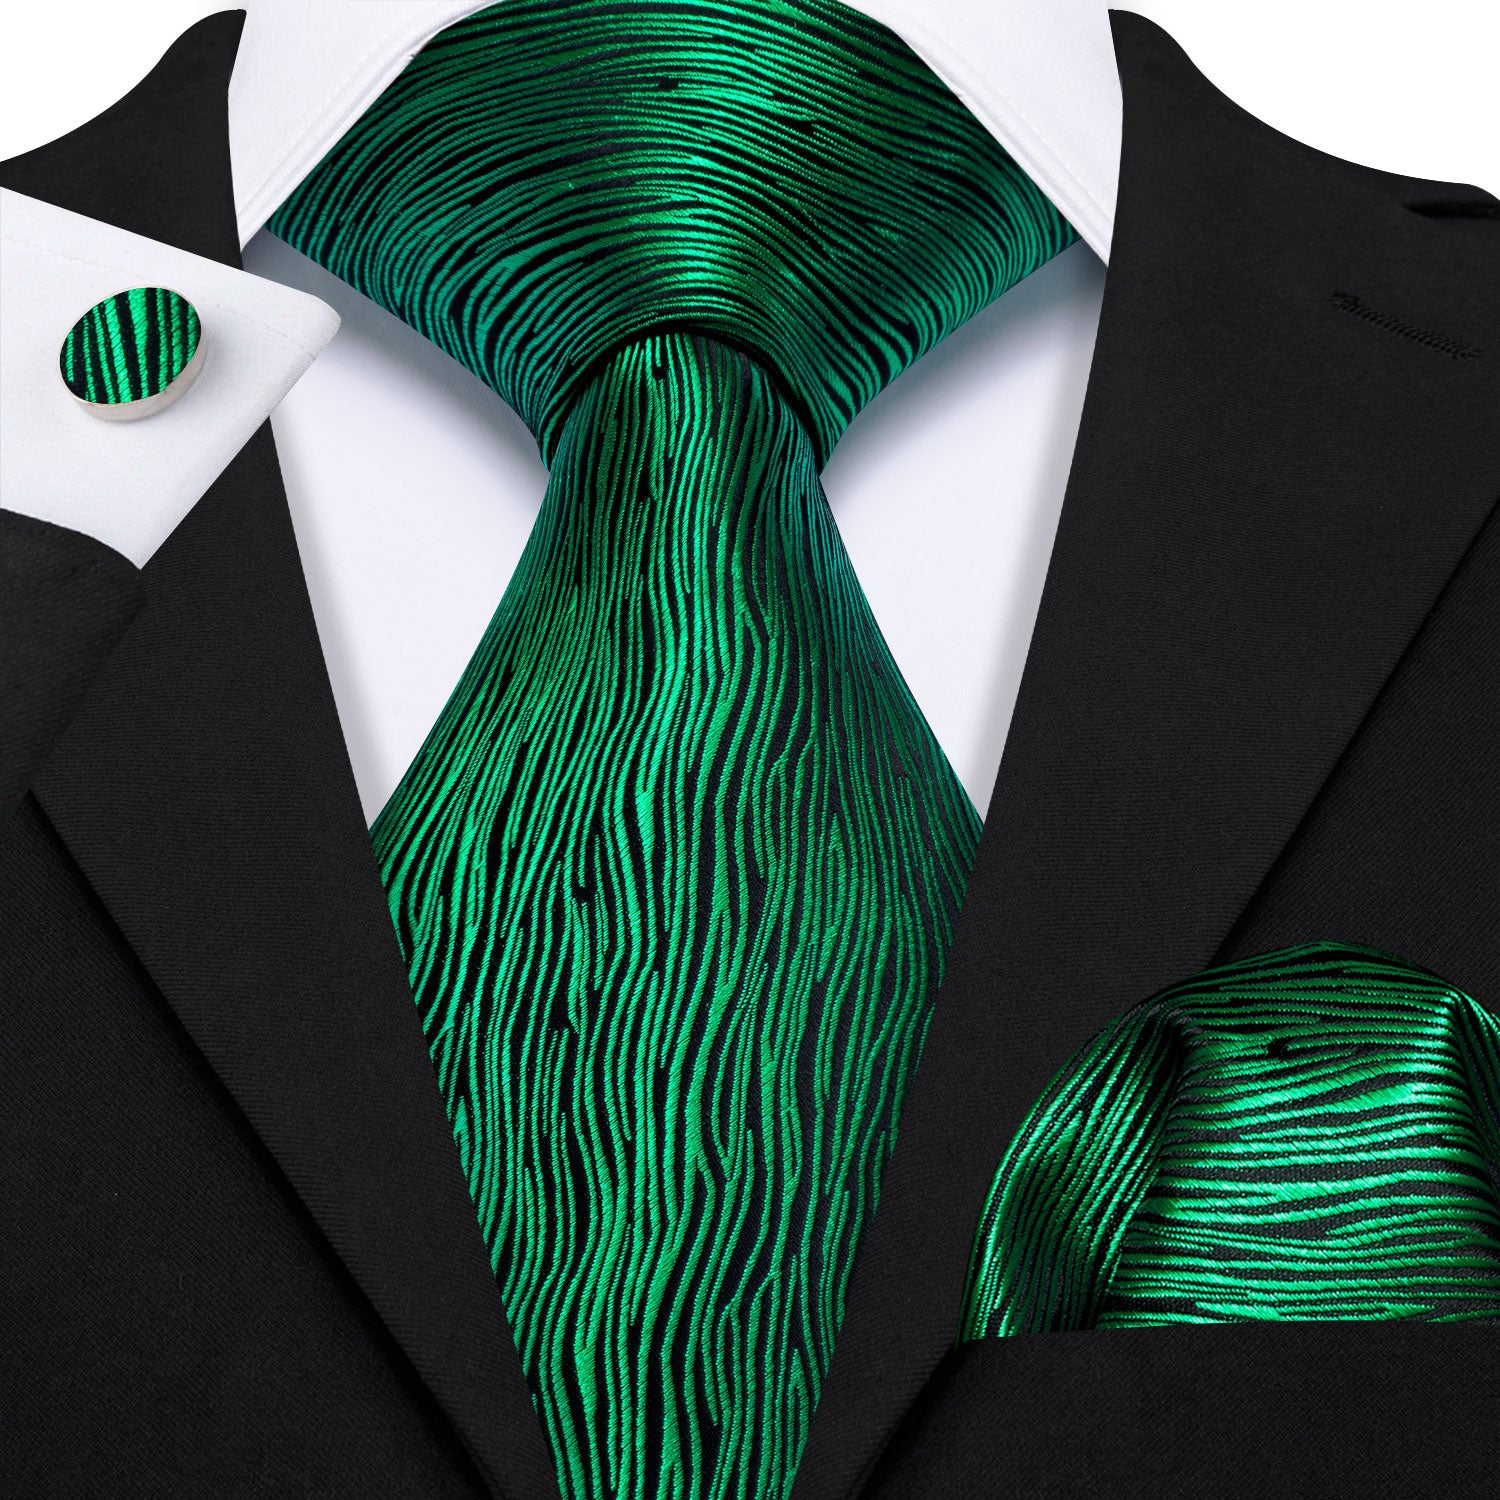 Barry Wang Novetly Green Striped Paisley Tie Handkerchief Cufflinks Set